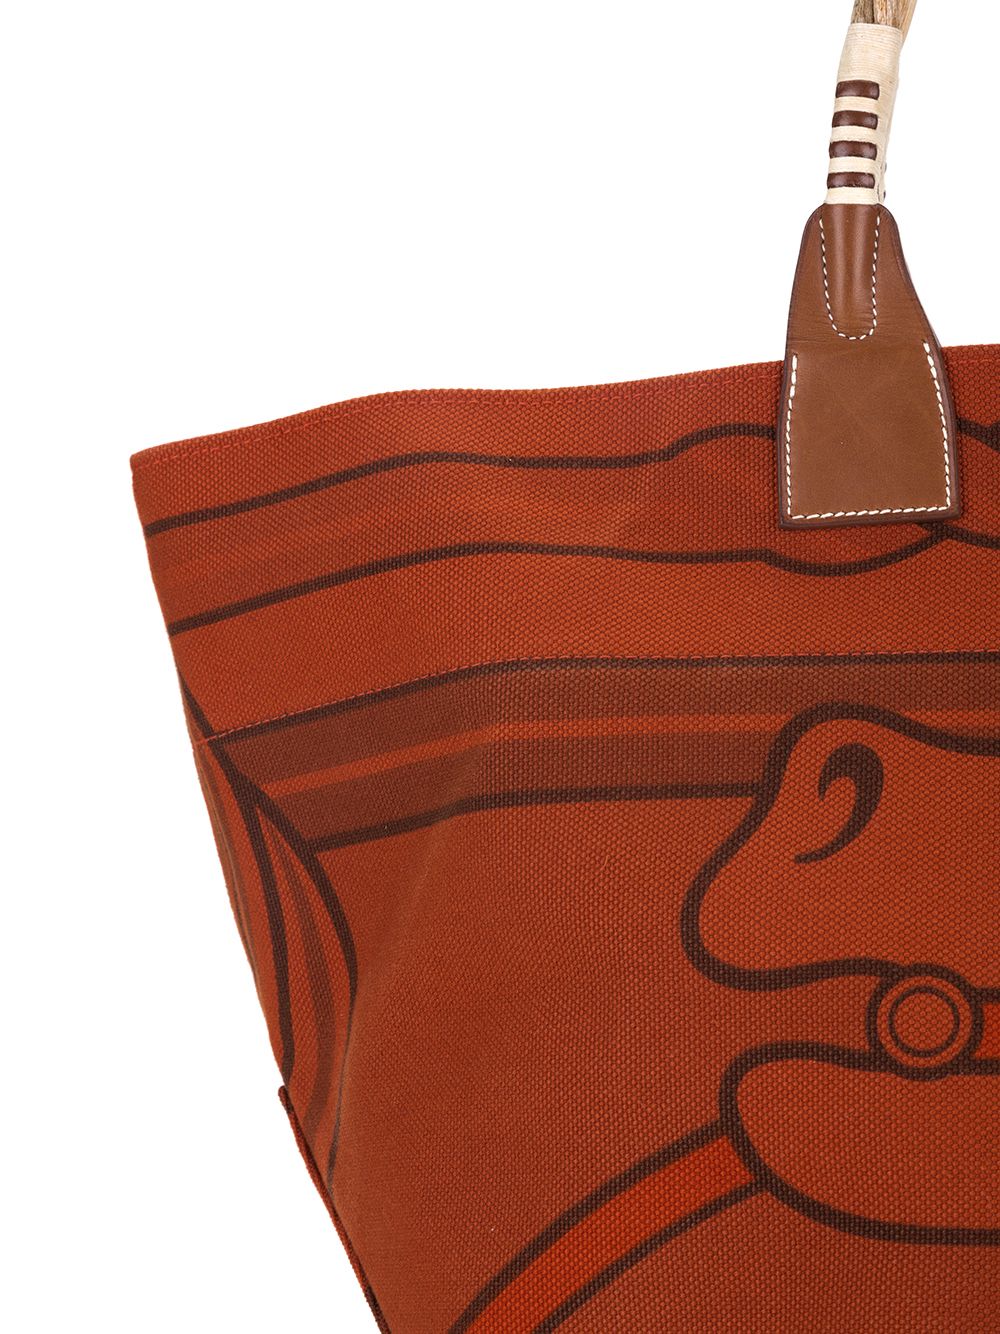 Hermes Beach Tote Bag Horse Printed Toile New